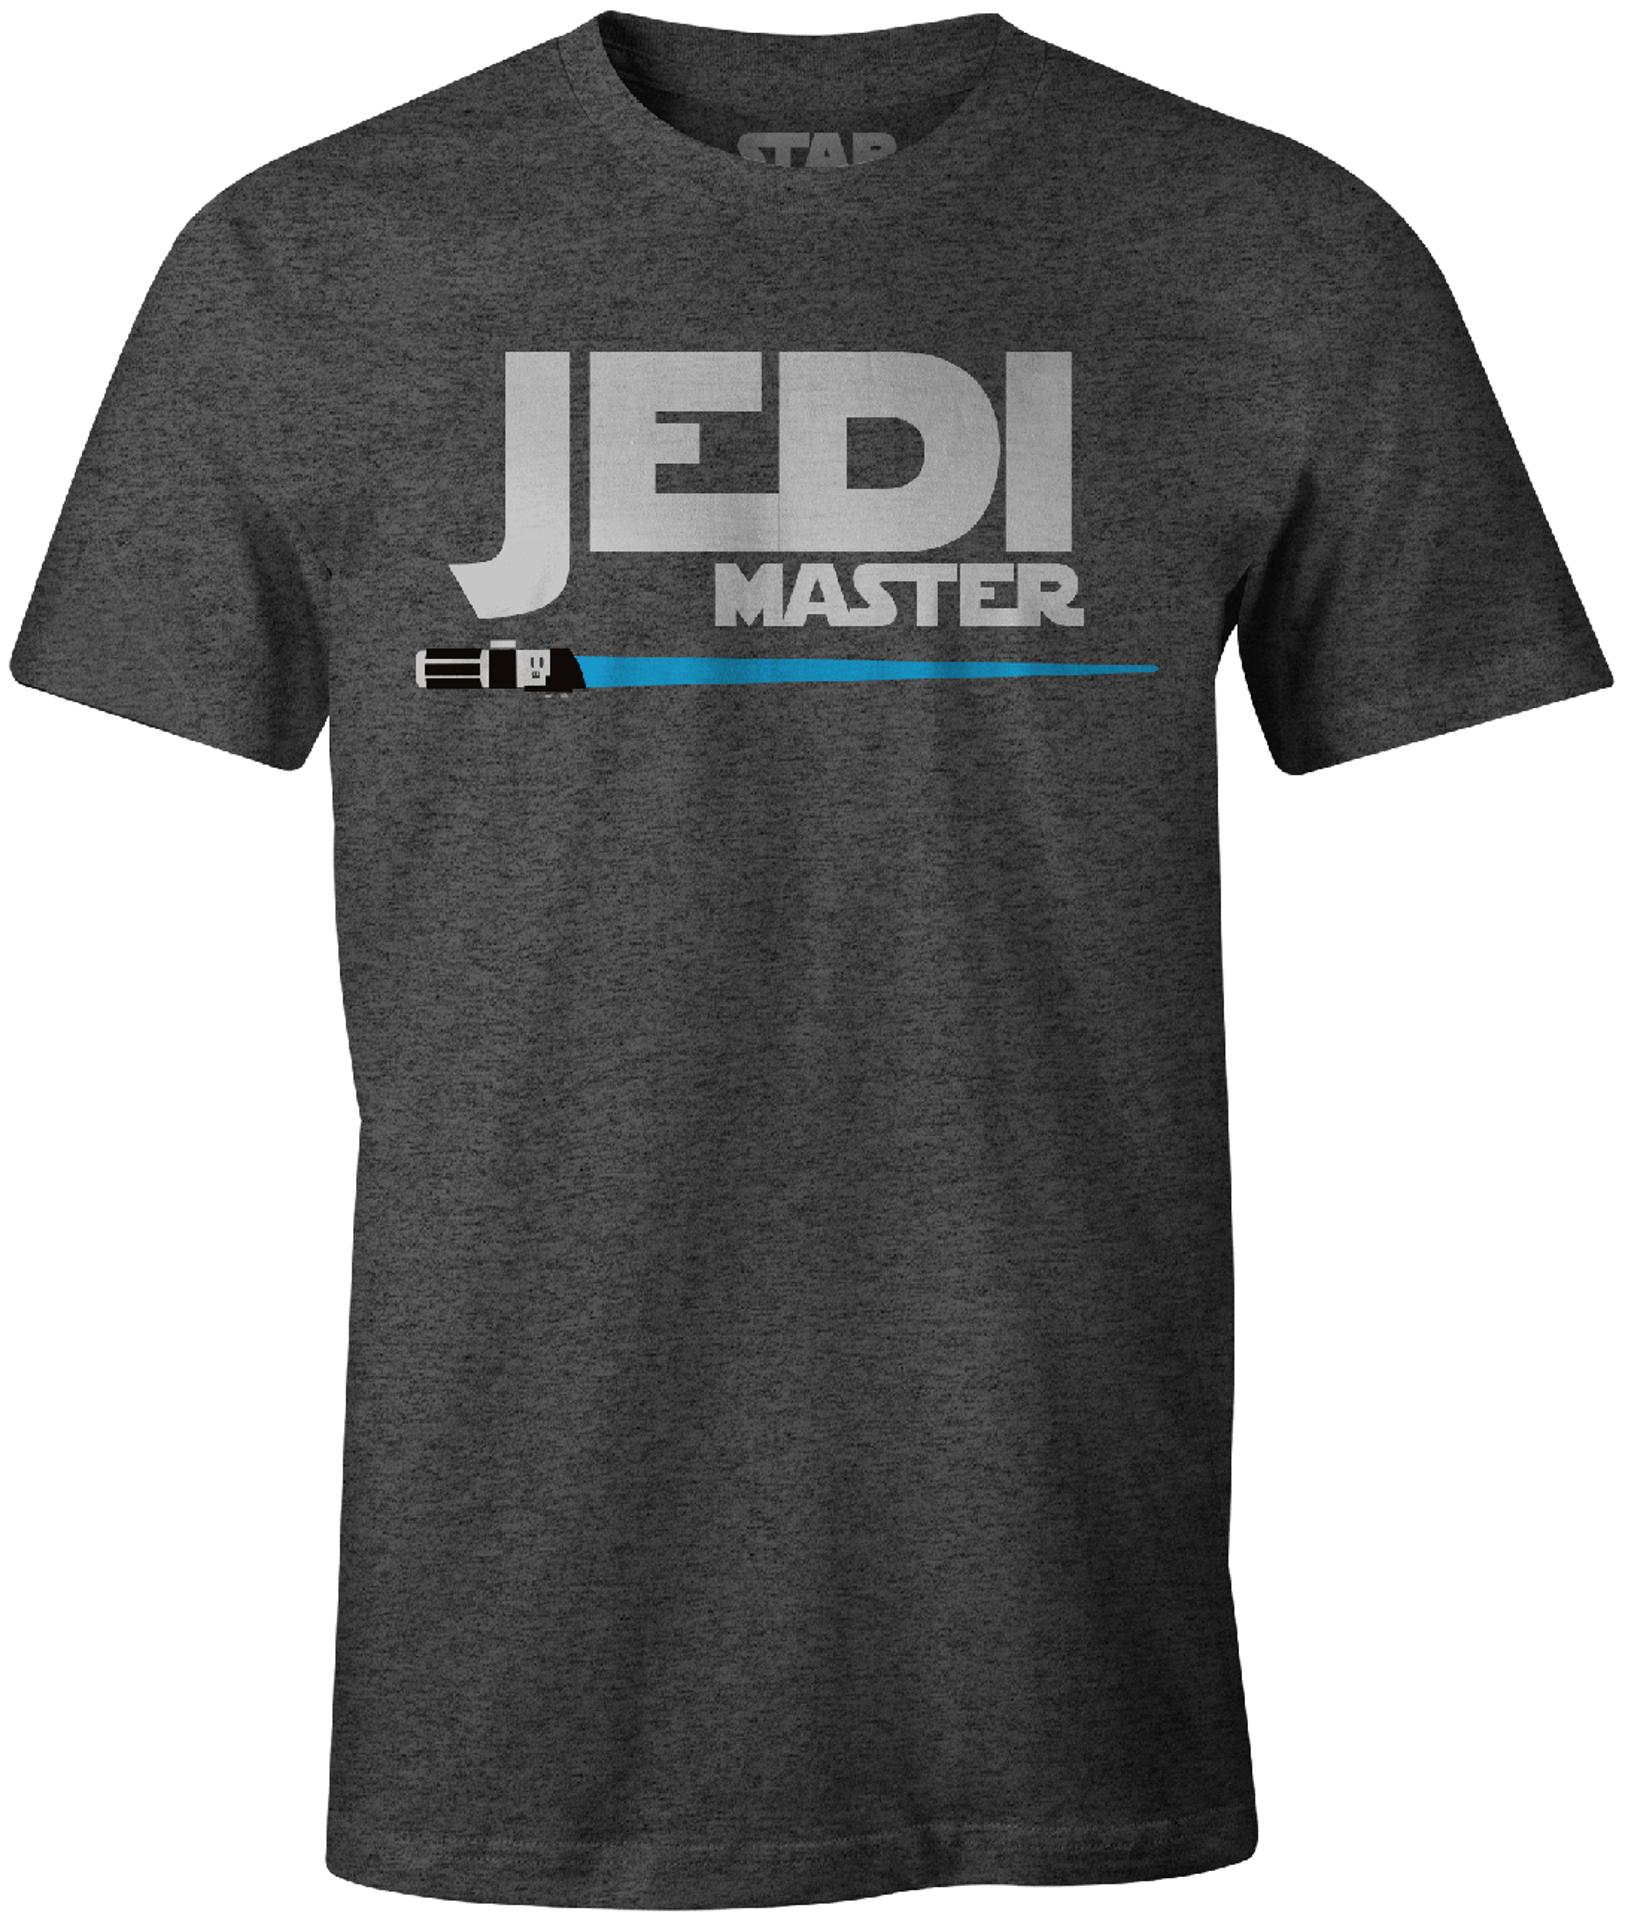 Star Wars - T-Shirt Noir Maître Jedi - S